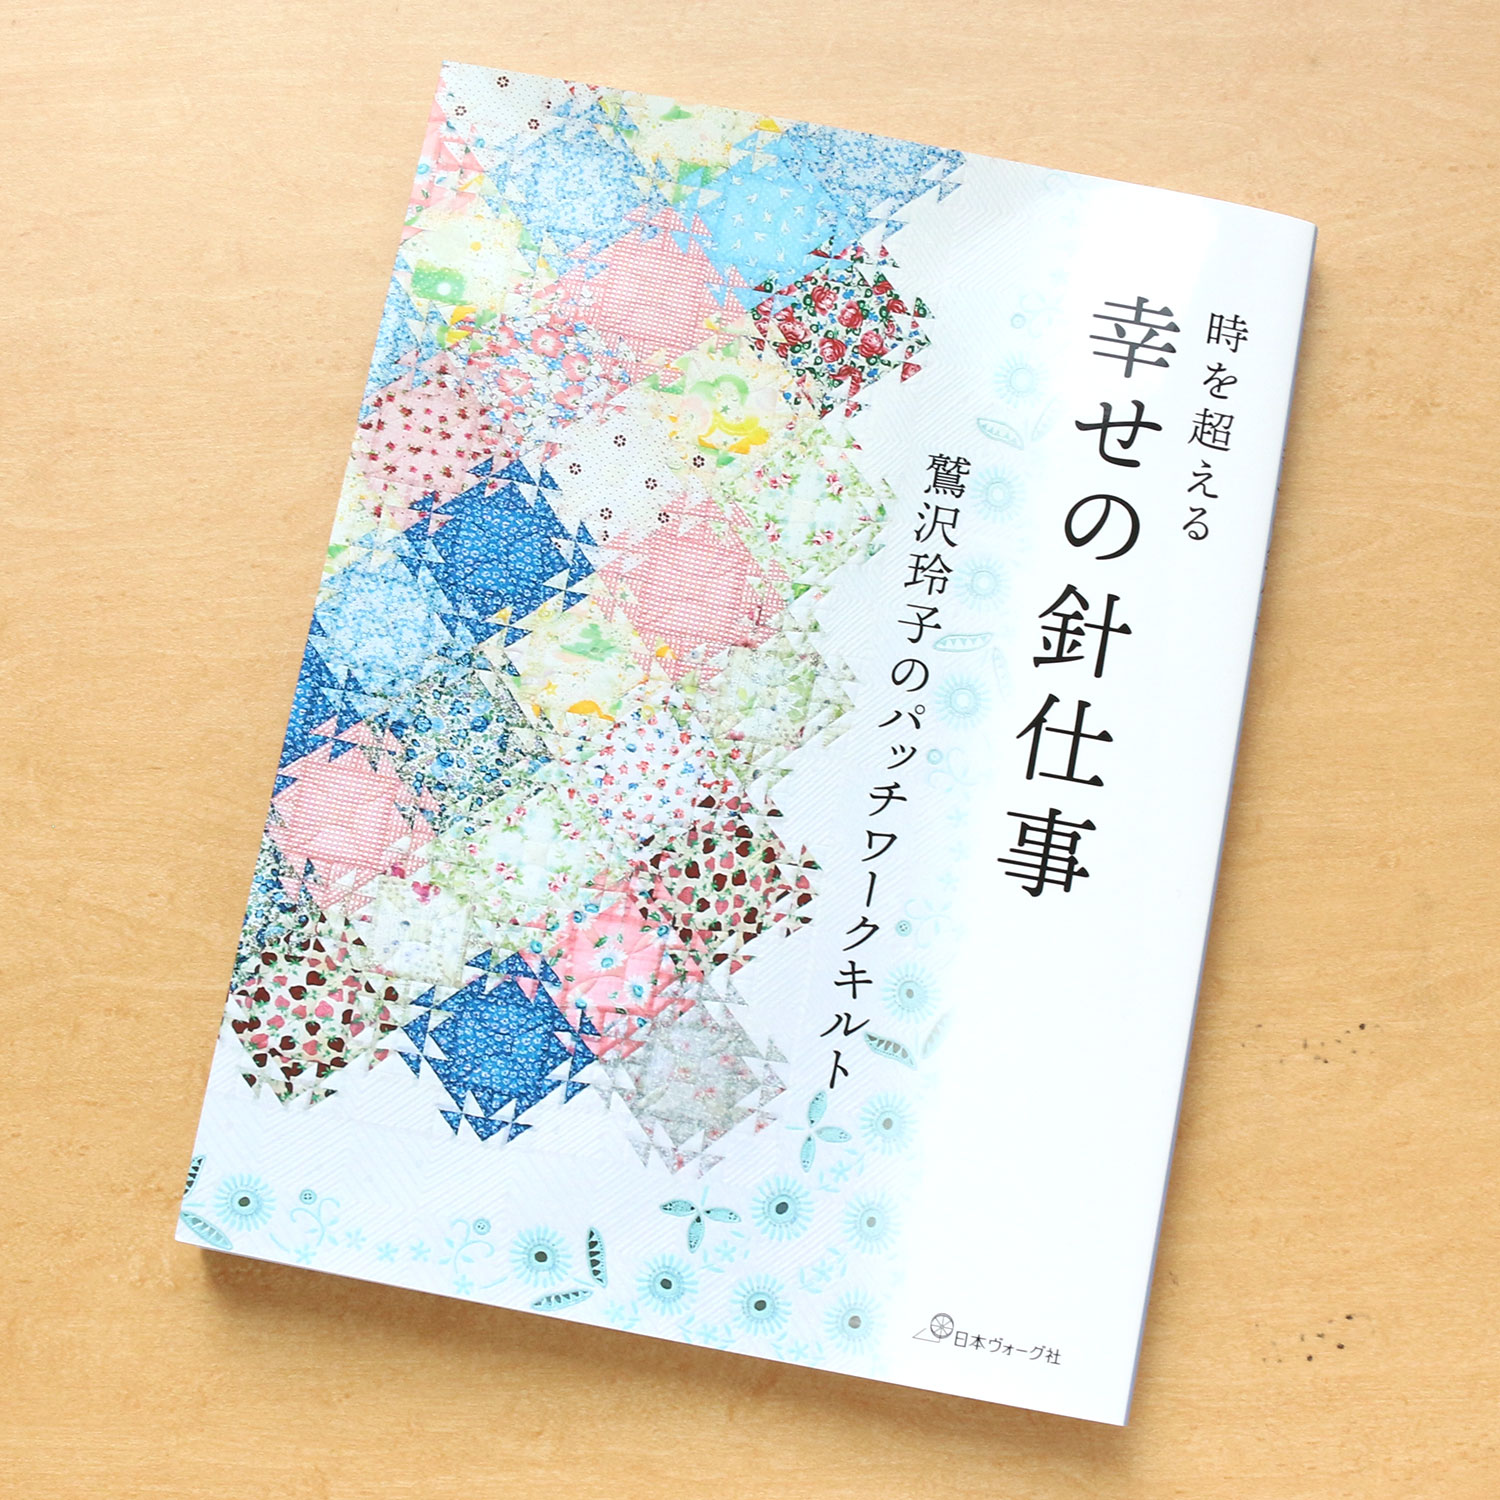 NV70675 Happy Needlework: Patchwork Quilts by Reiko Washizawa(book)